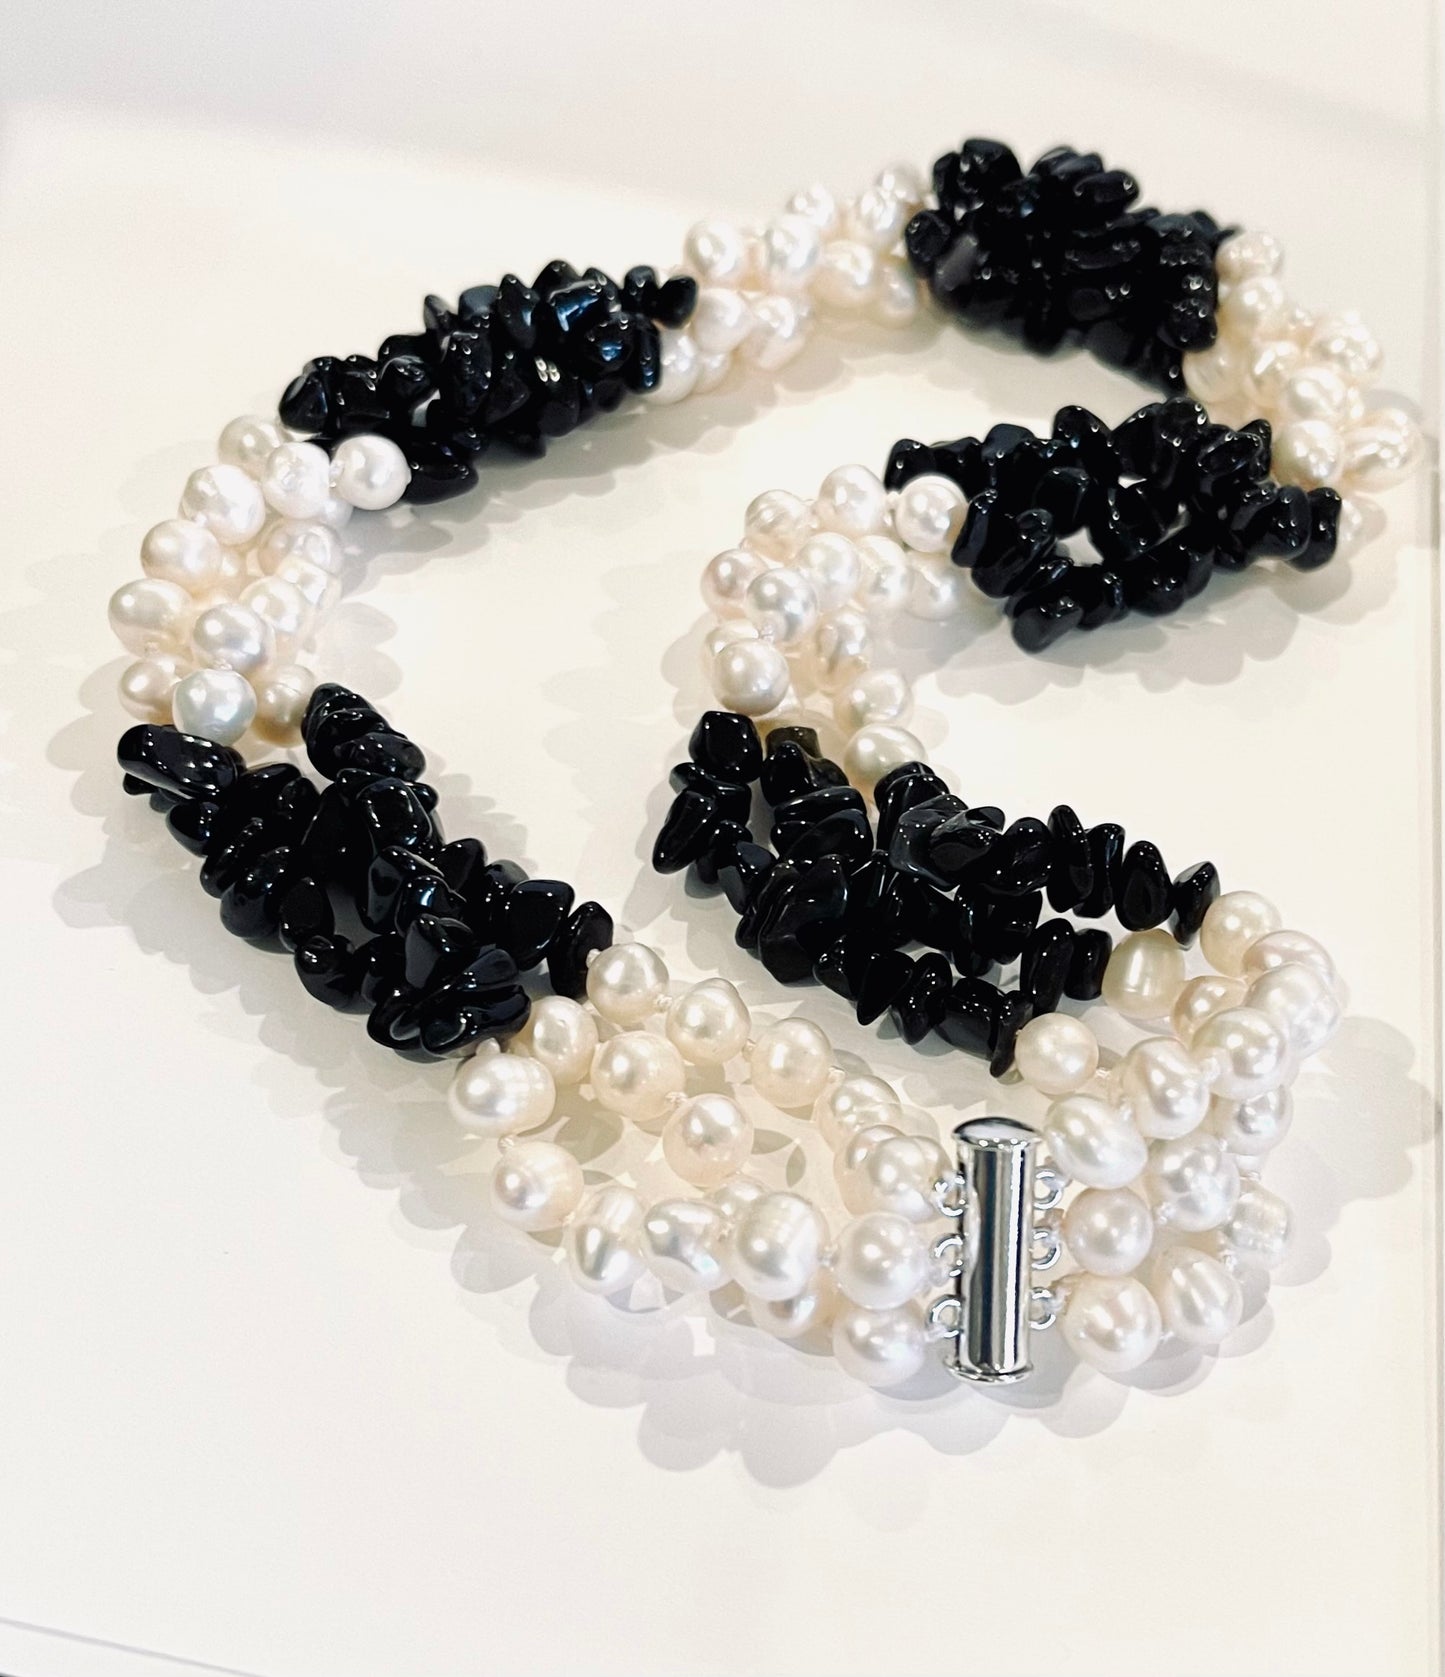 Triple-Strand Black Onyx & Freshwater Pearls Gemstone Statement Necklace 19"